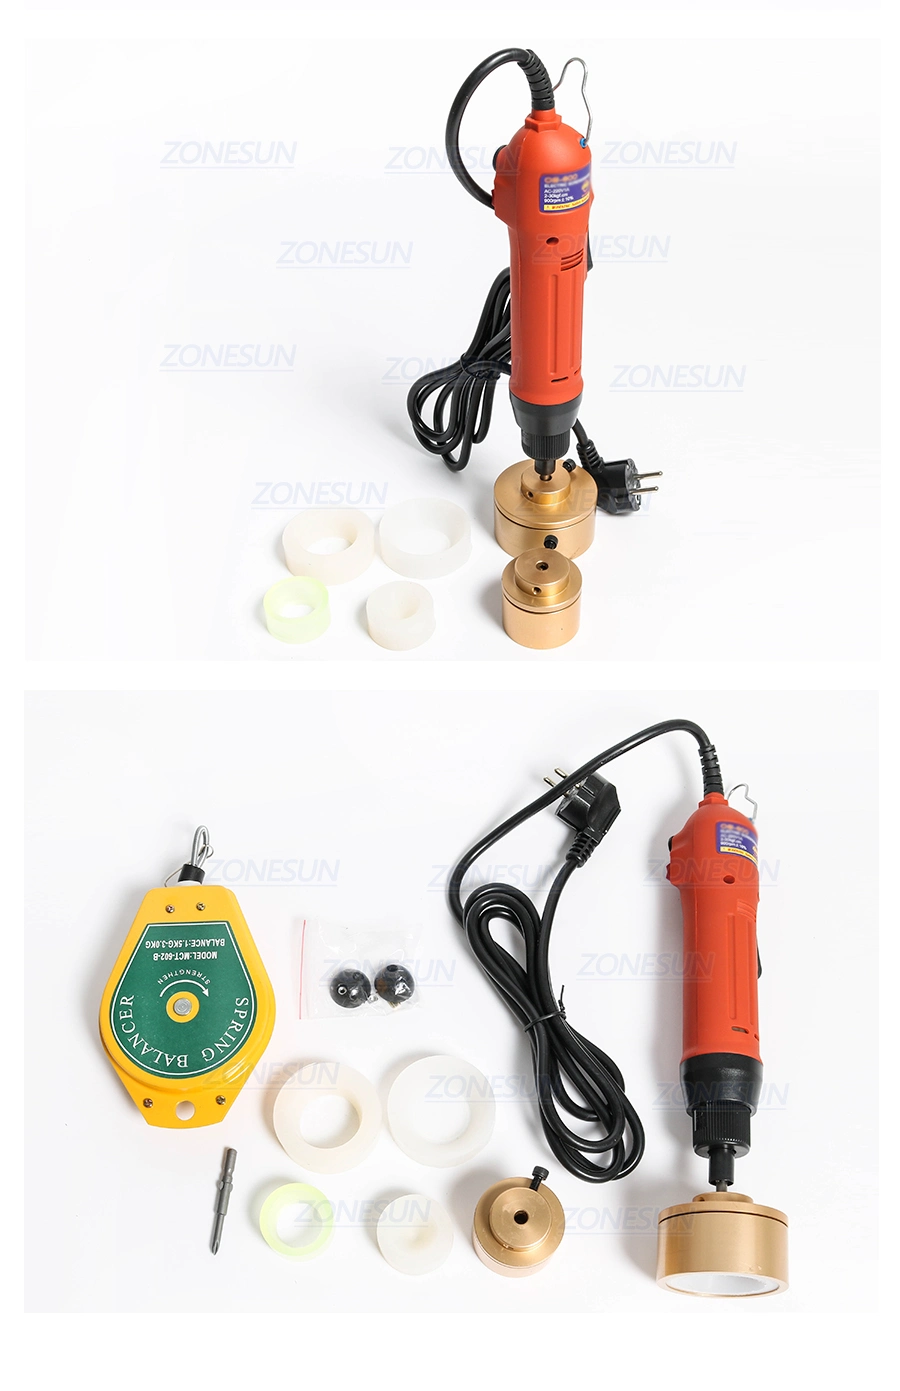 Zonesun 28-32mm Plastic Bottle Capper Portable Automatic Electric Capping Machine Cap Screwing Machine Sealing Machine